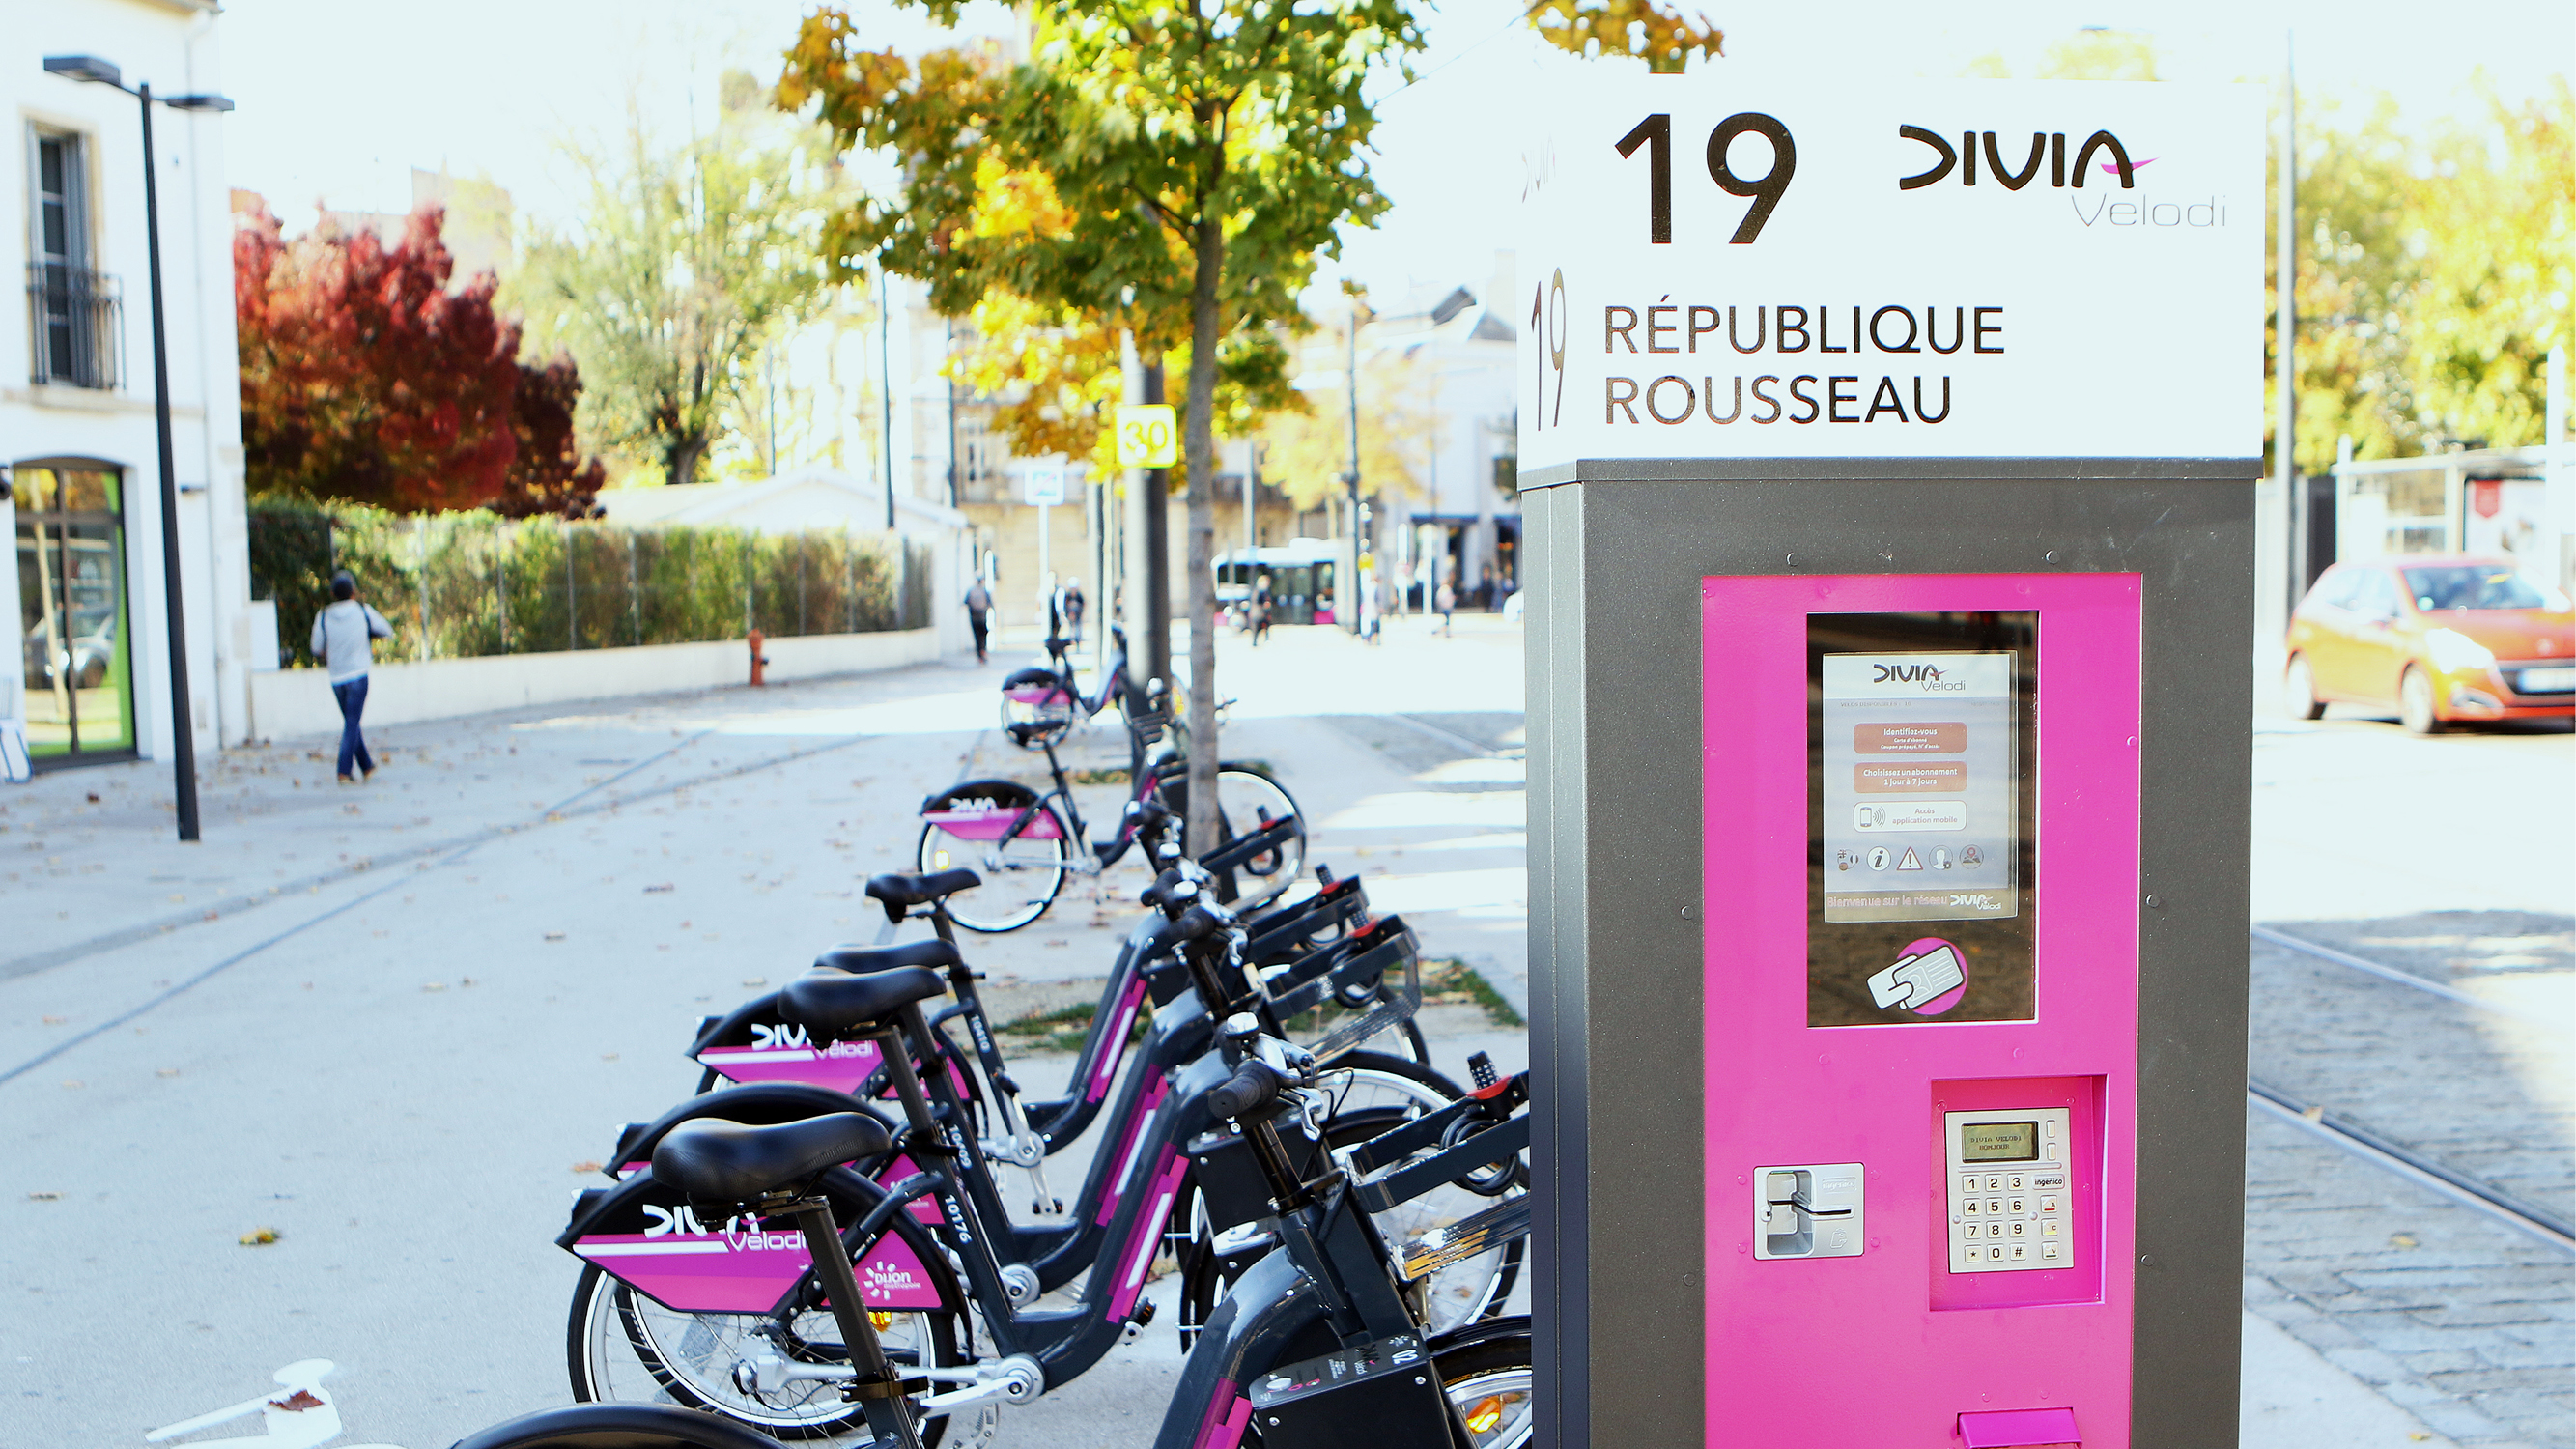 Divia vélodi the self-service bike in Dijon